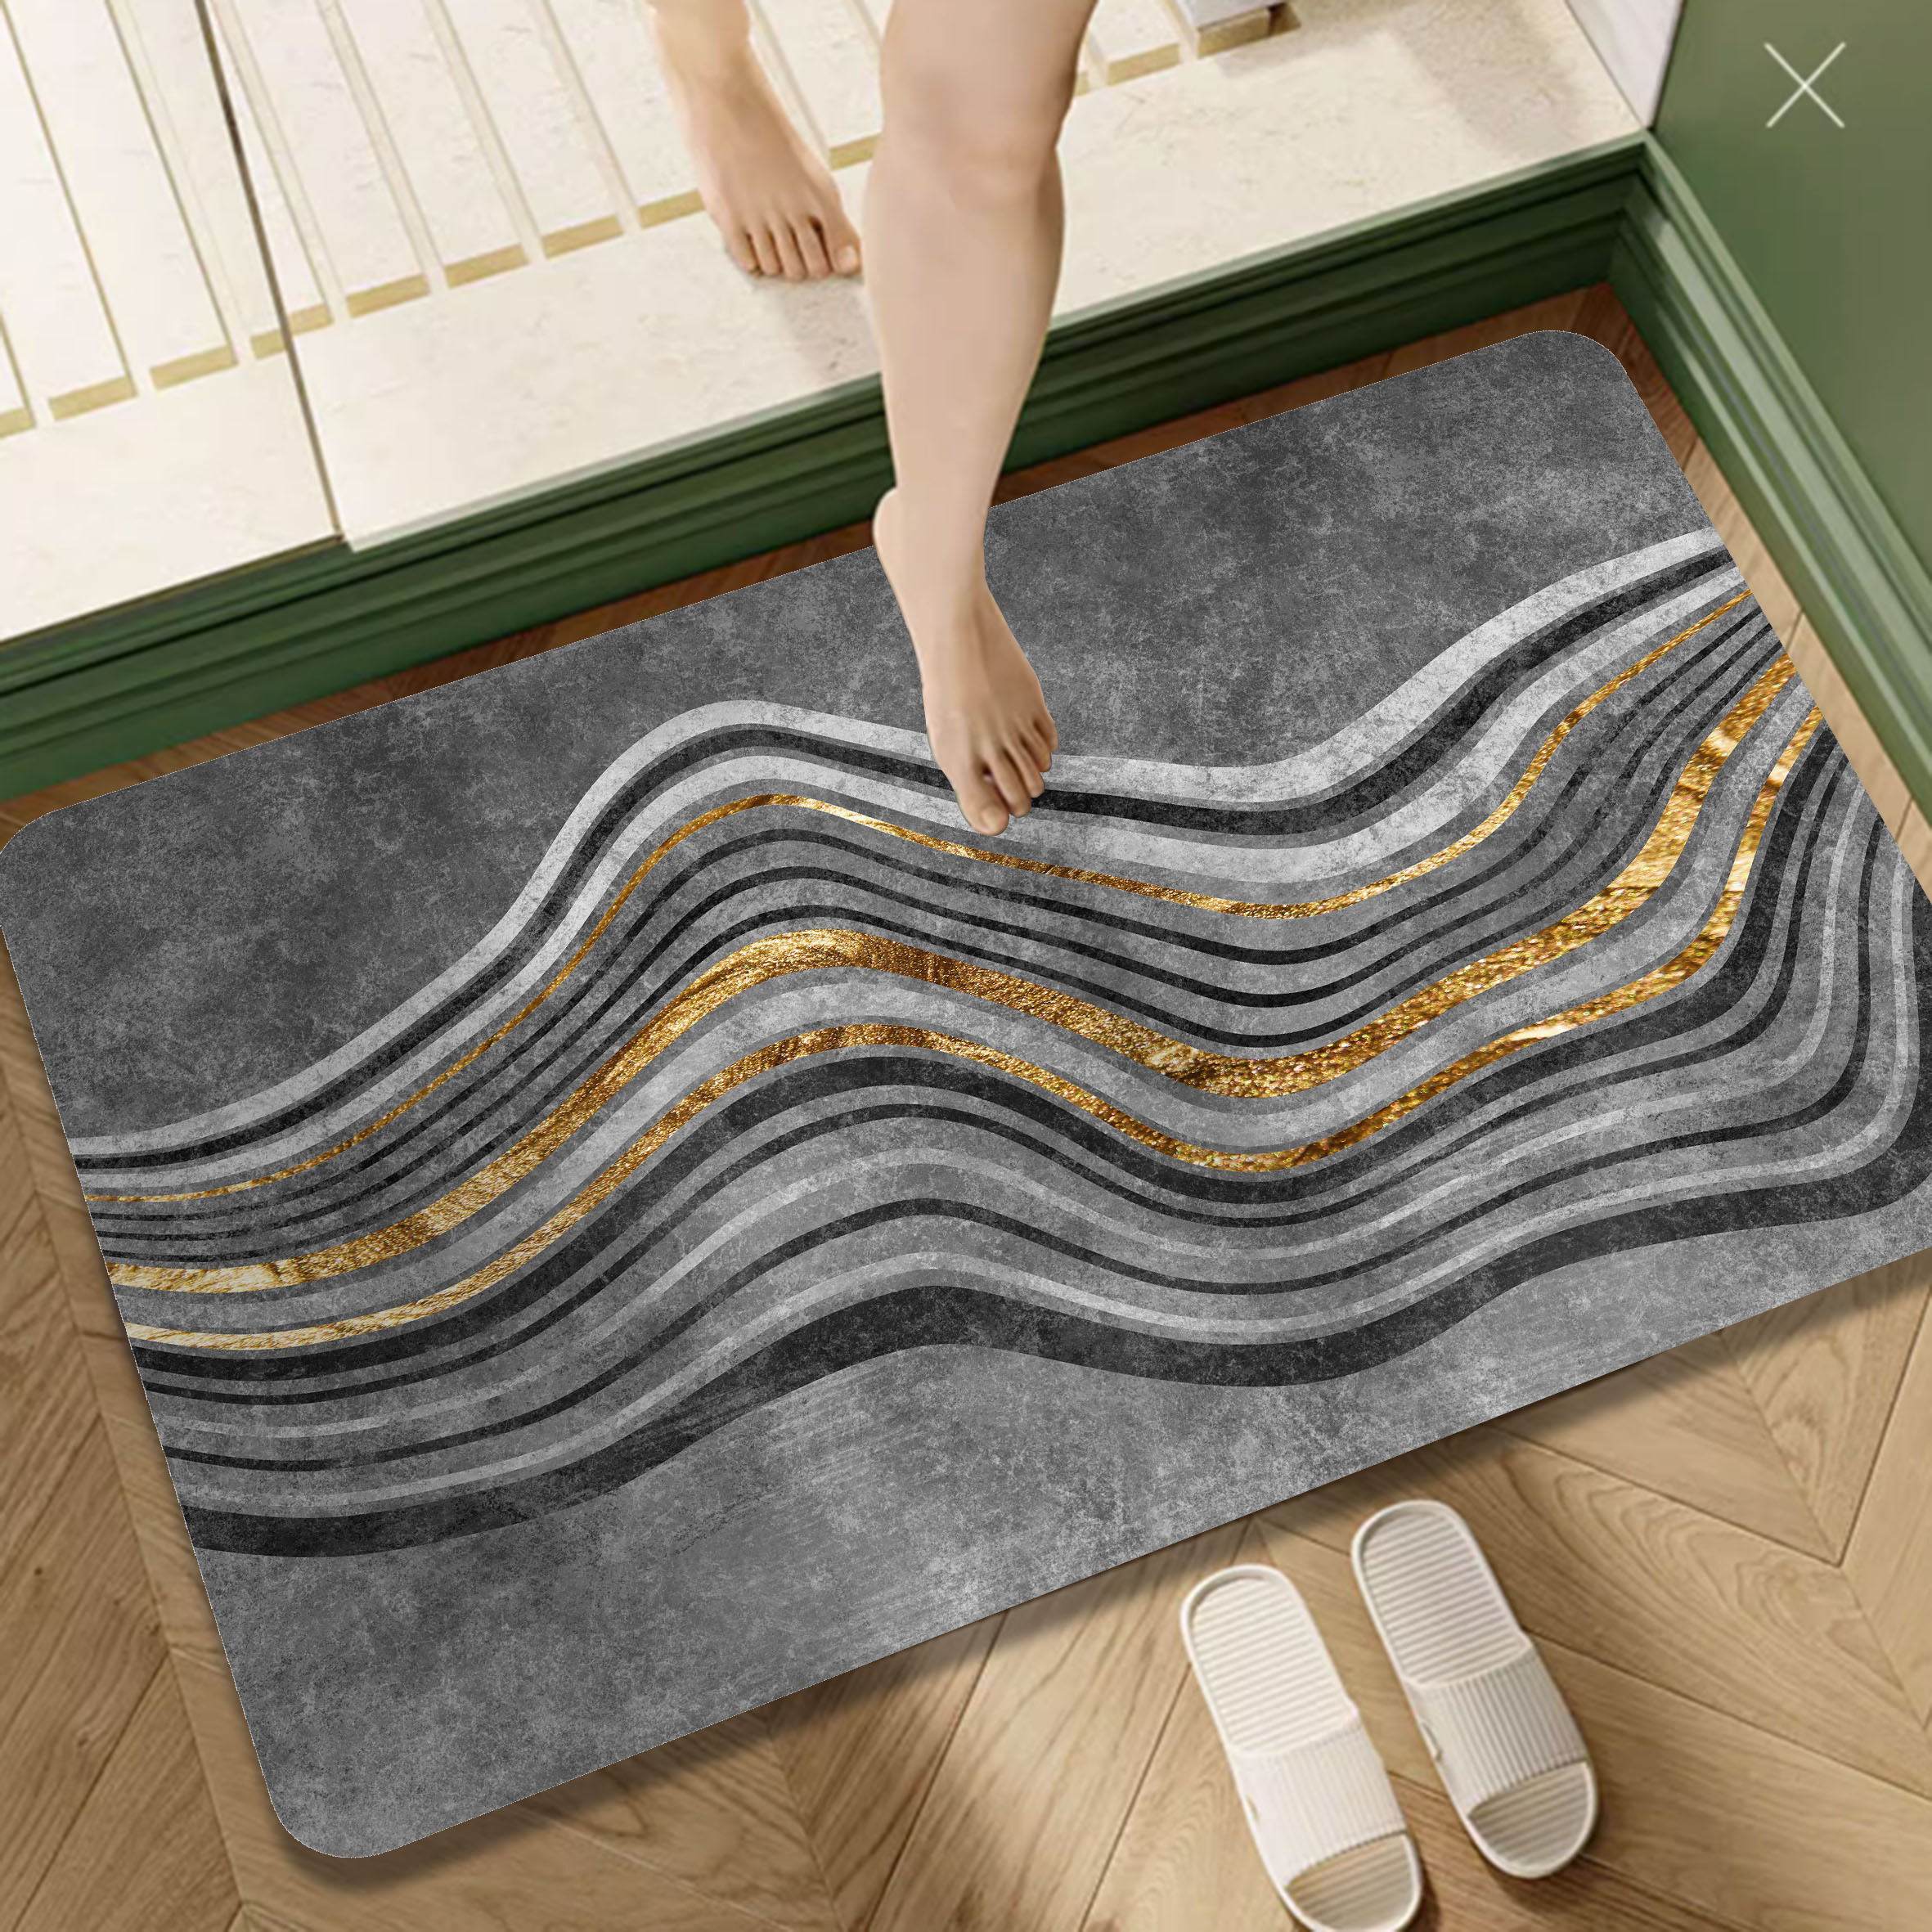 Absorbent Soft Bath Mat Bathroom Shower Rug Floor Carpet Non Slip Home Quick  Dry